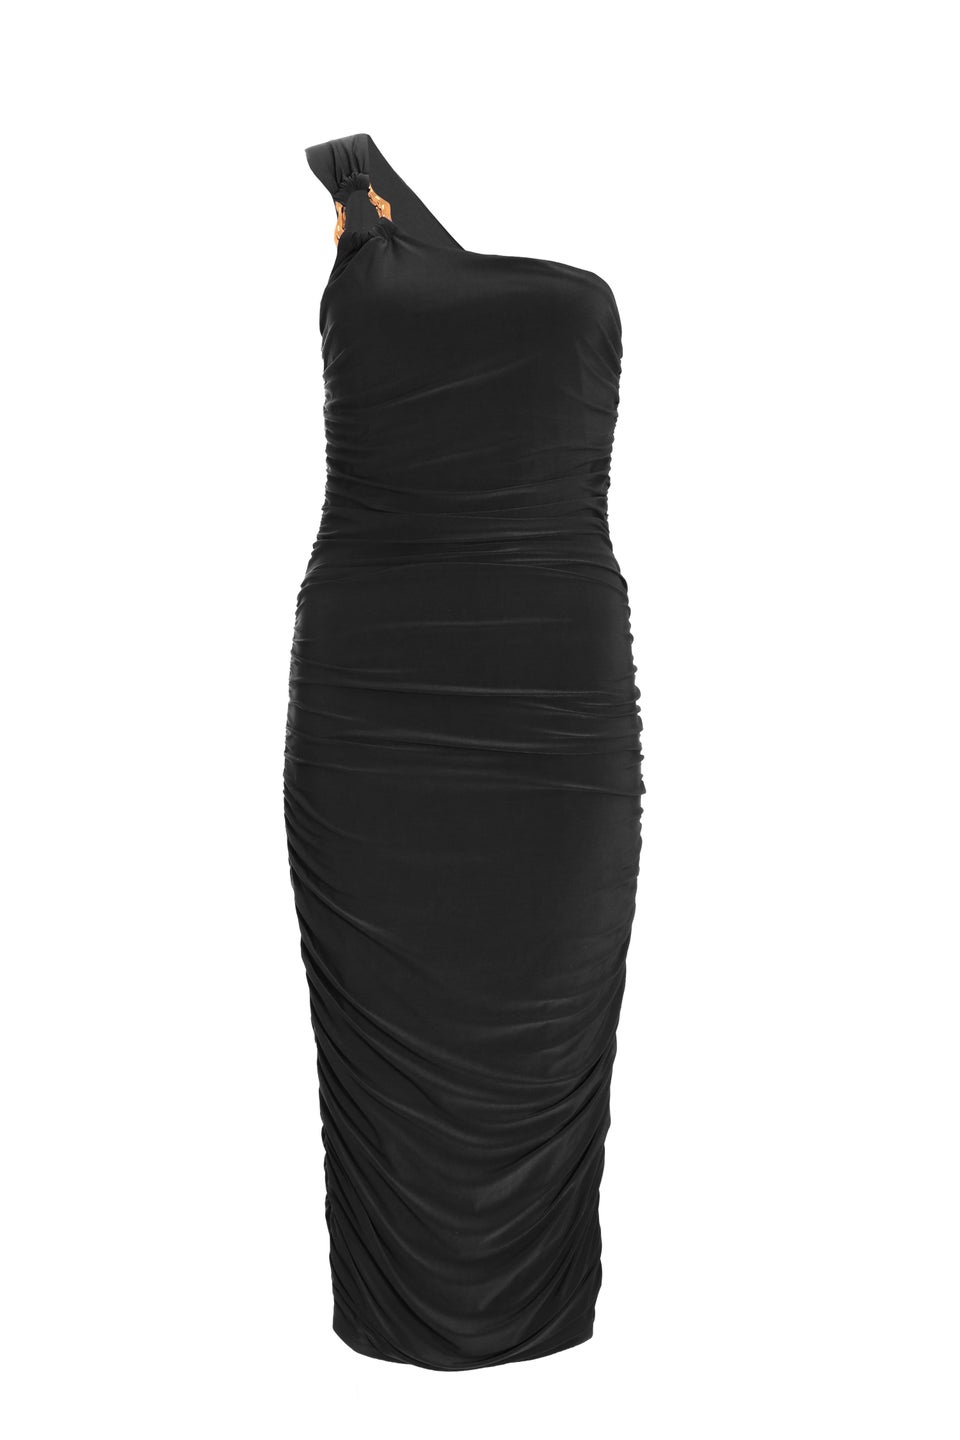 Quiz Black One Shoulder Bodycon Midi Dress - Matalan